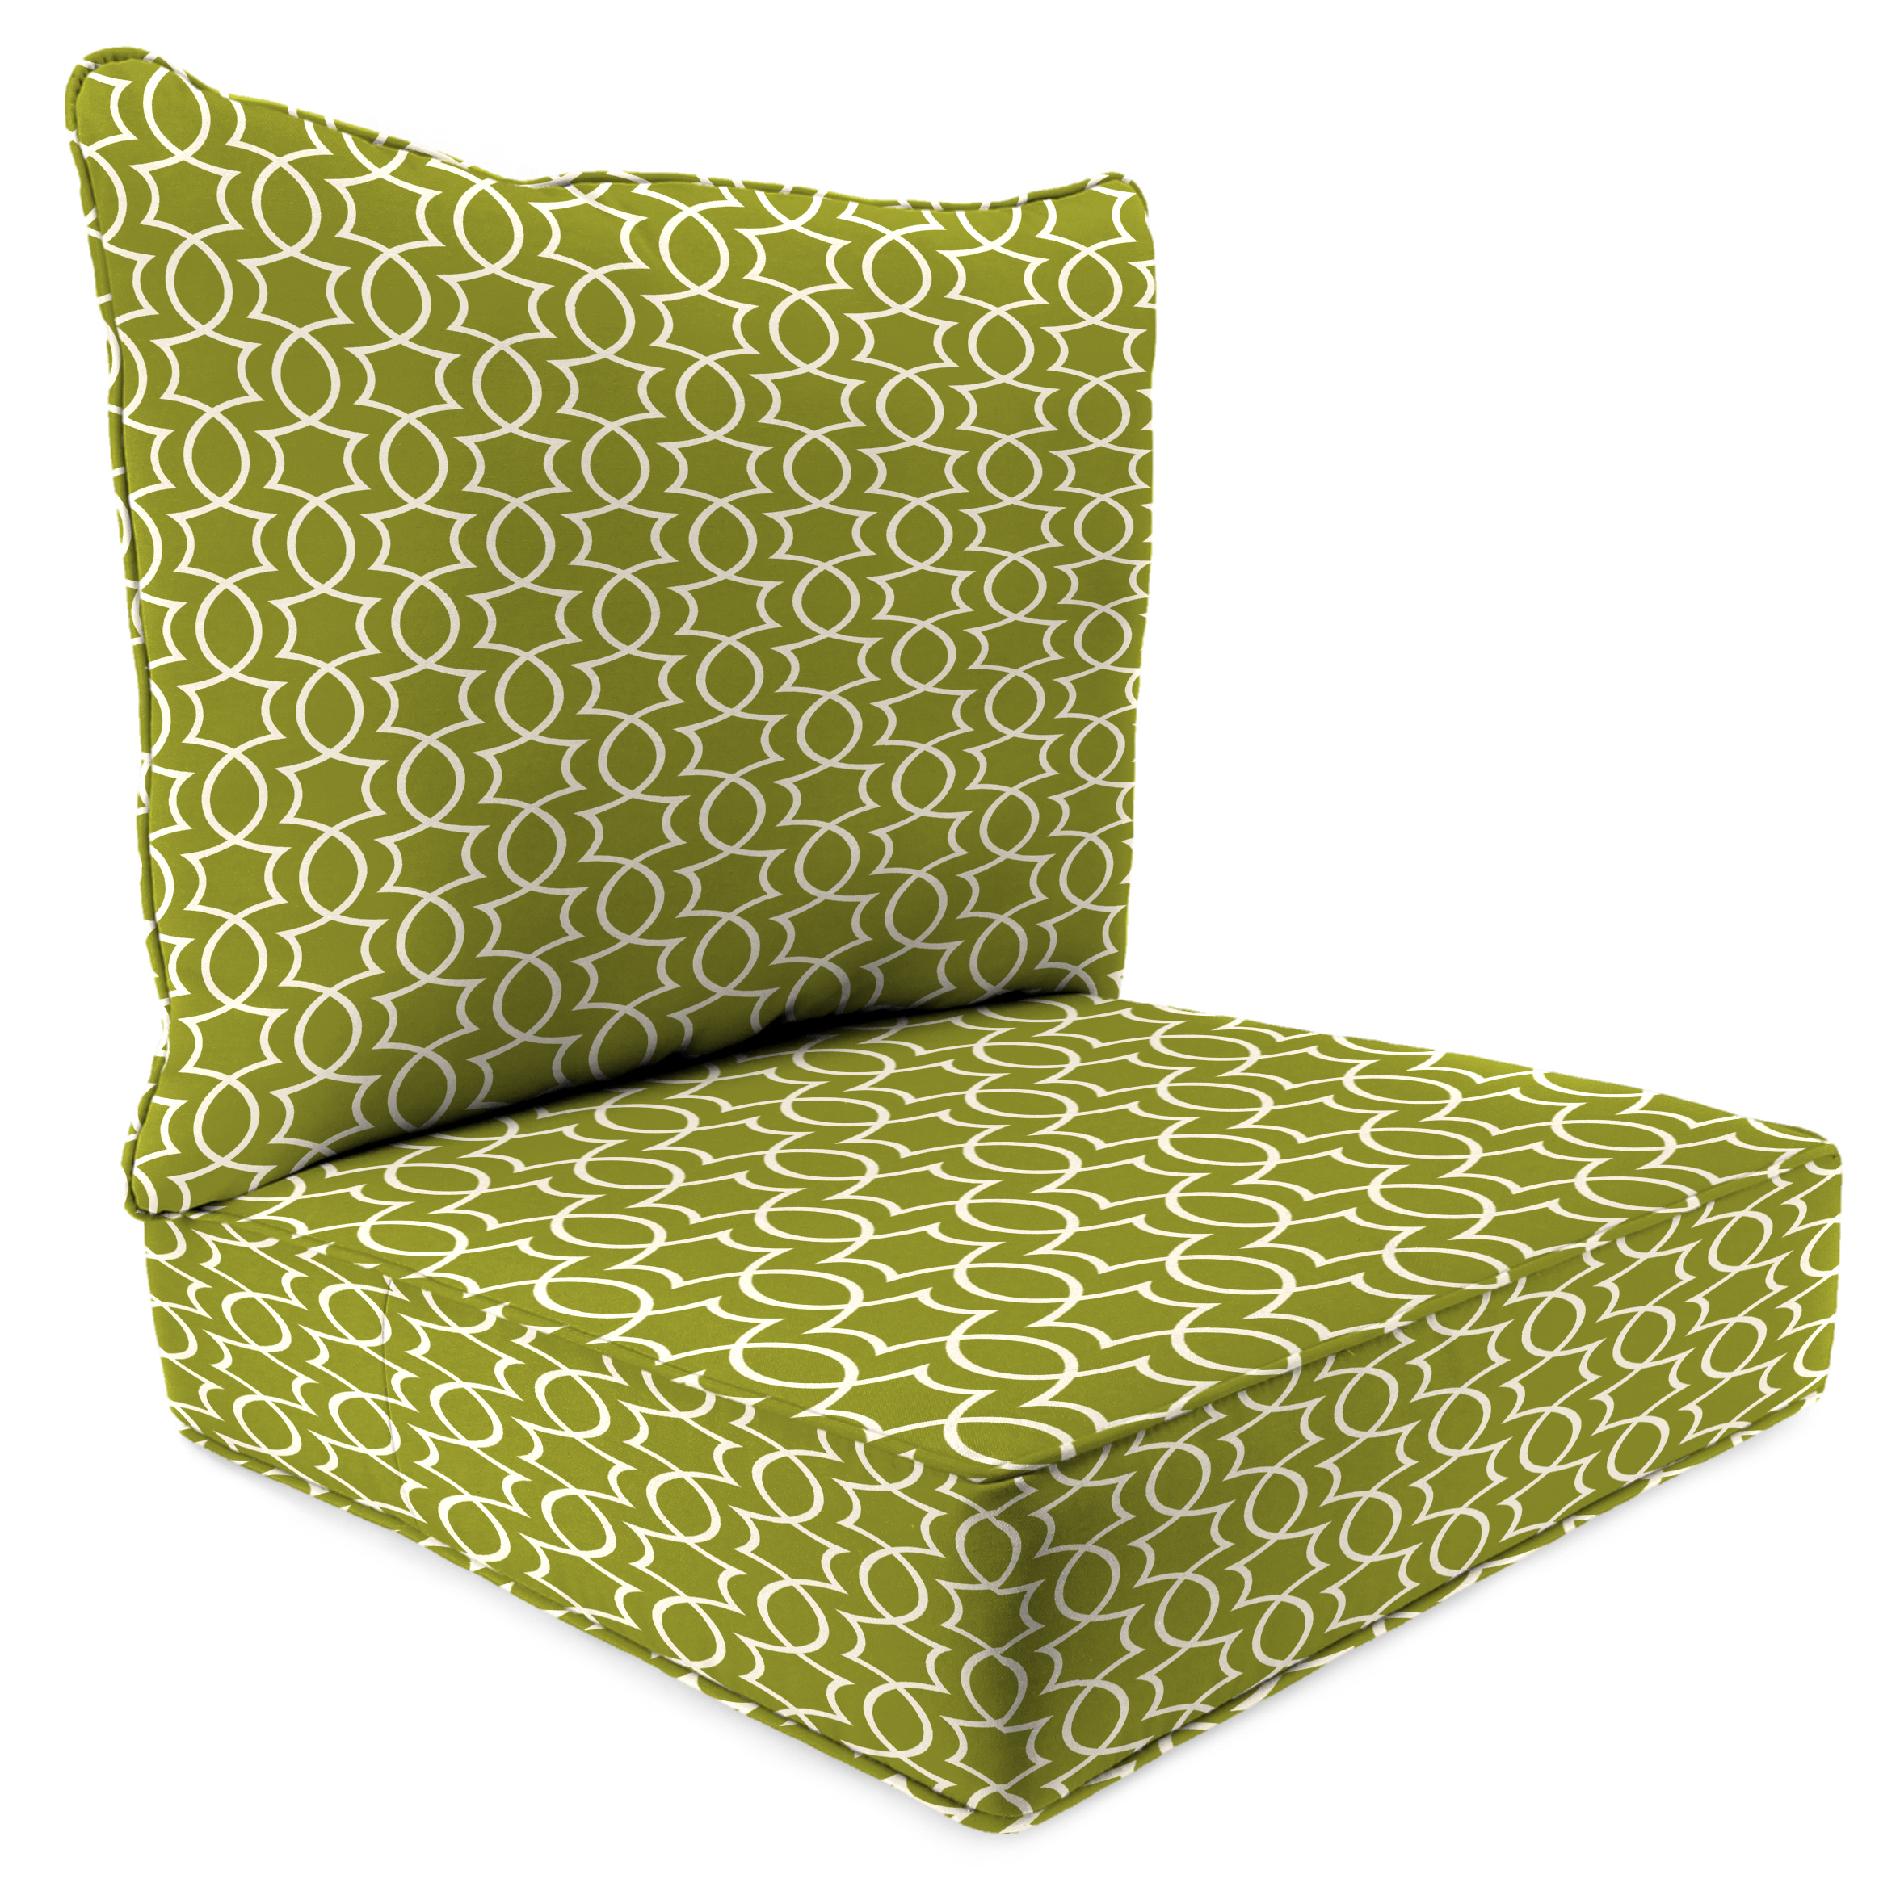 2 Piece Deep Seat Chair Cushion in Titan Kiwi